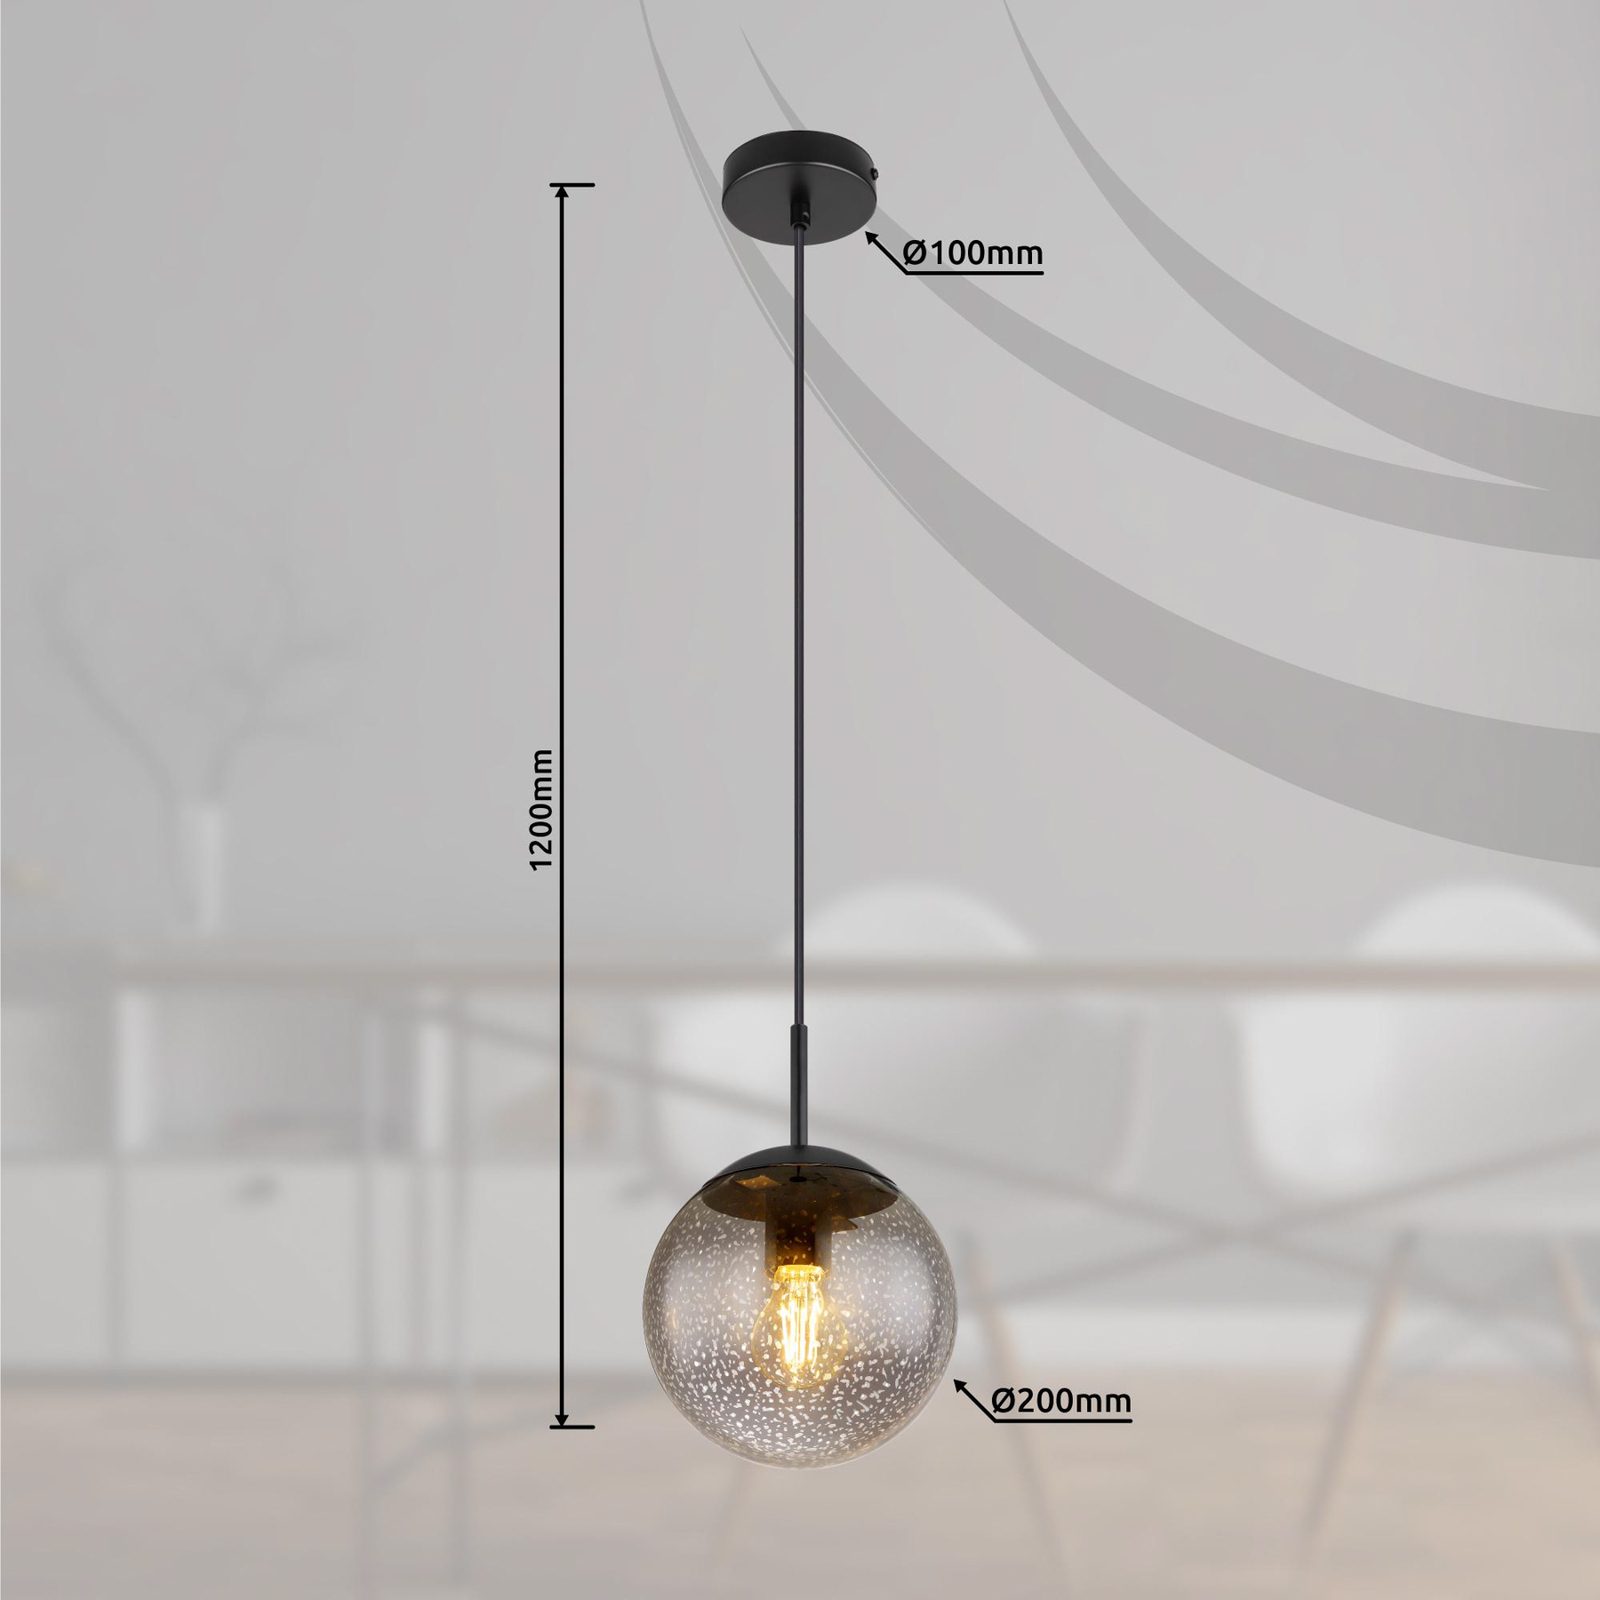 Samos pendant light, Ø 20 cm, smoky grey/black, glass